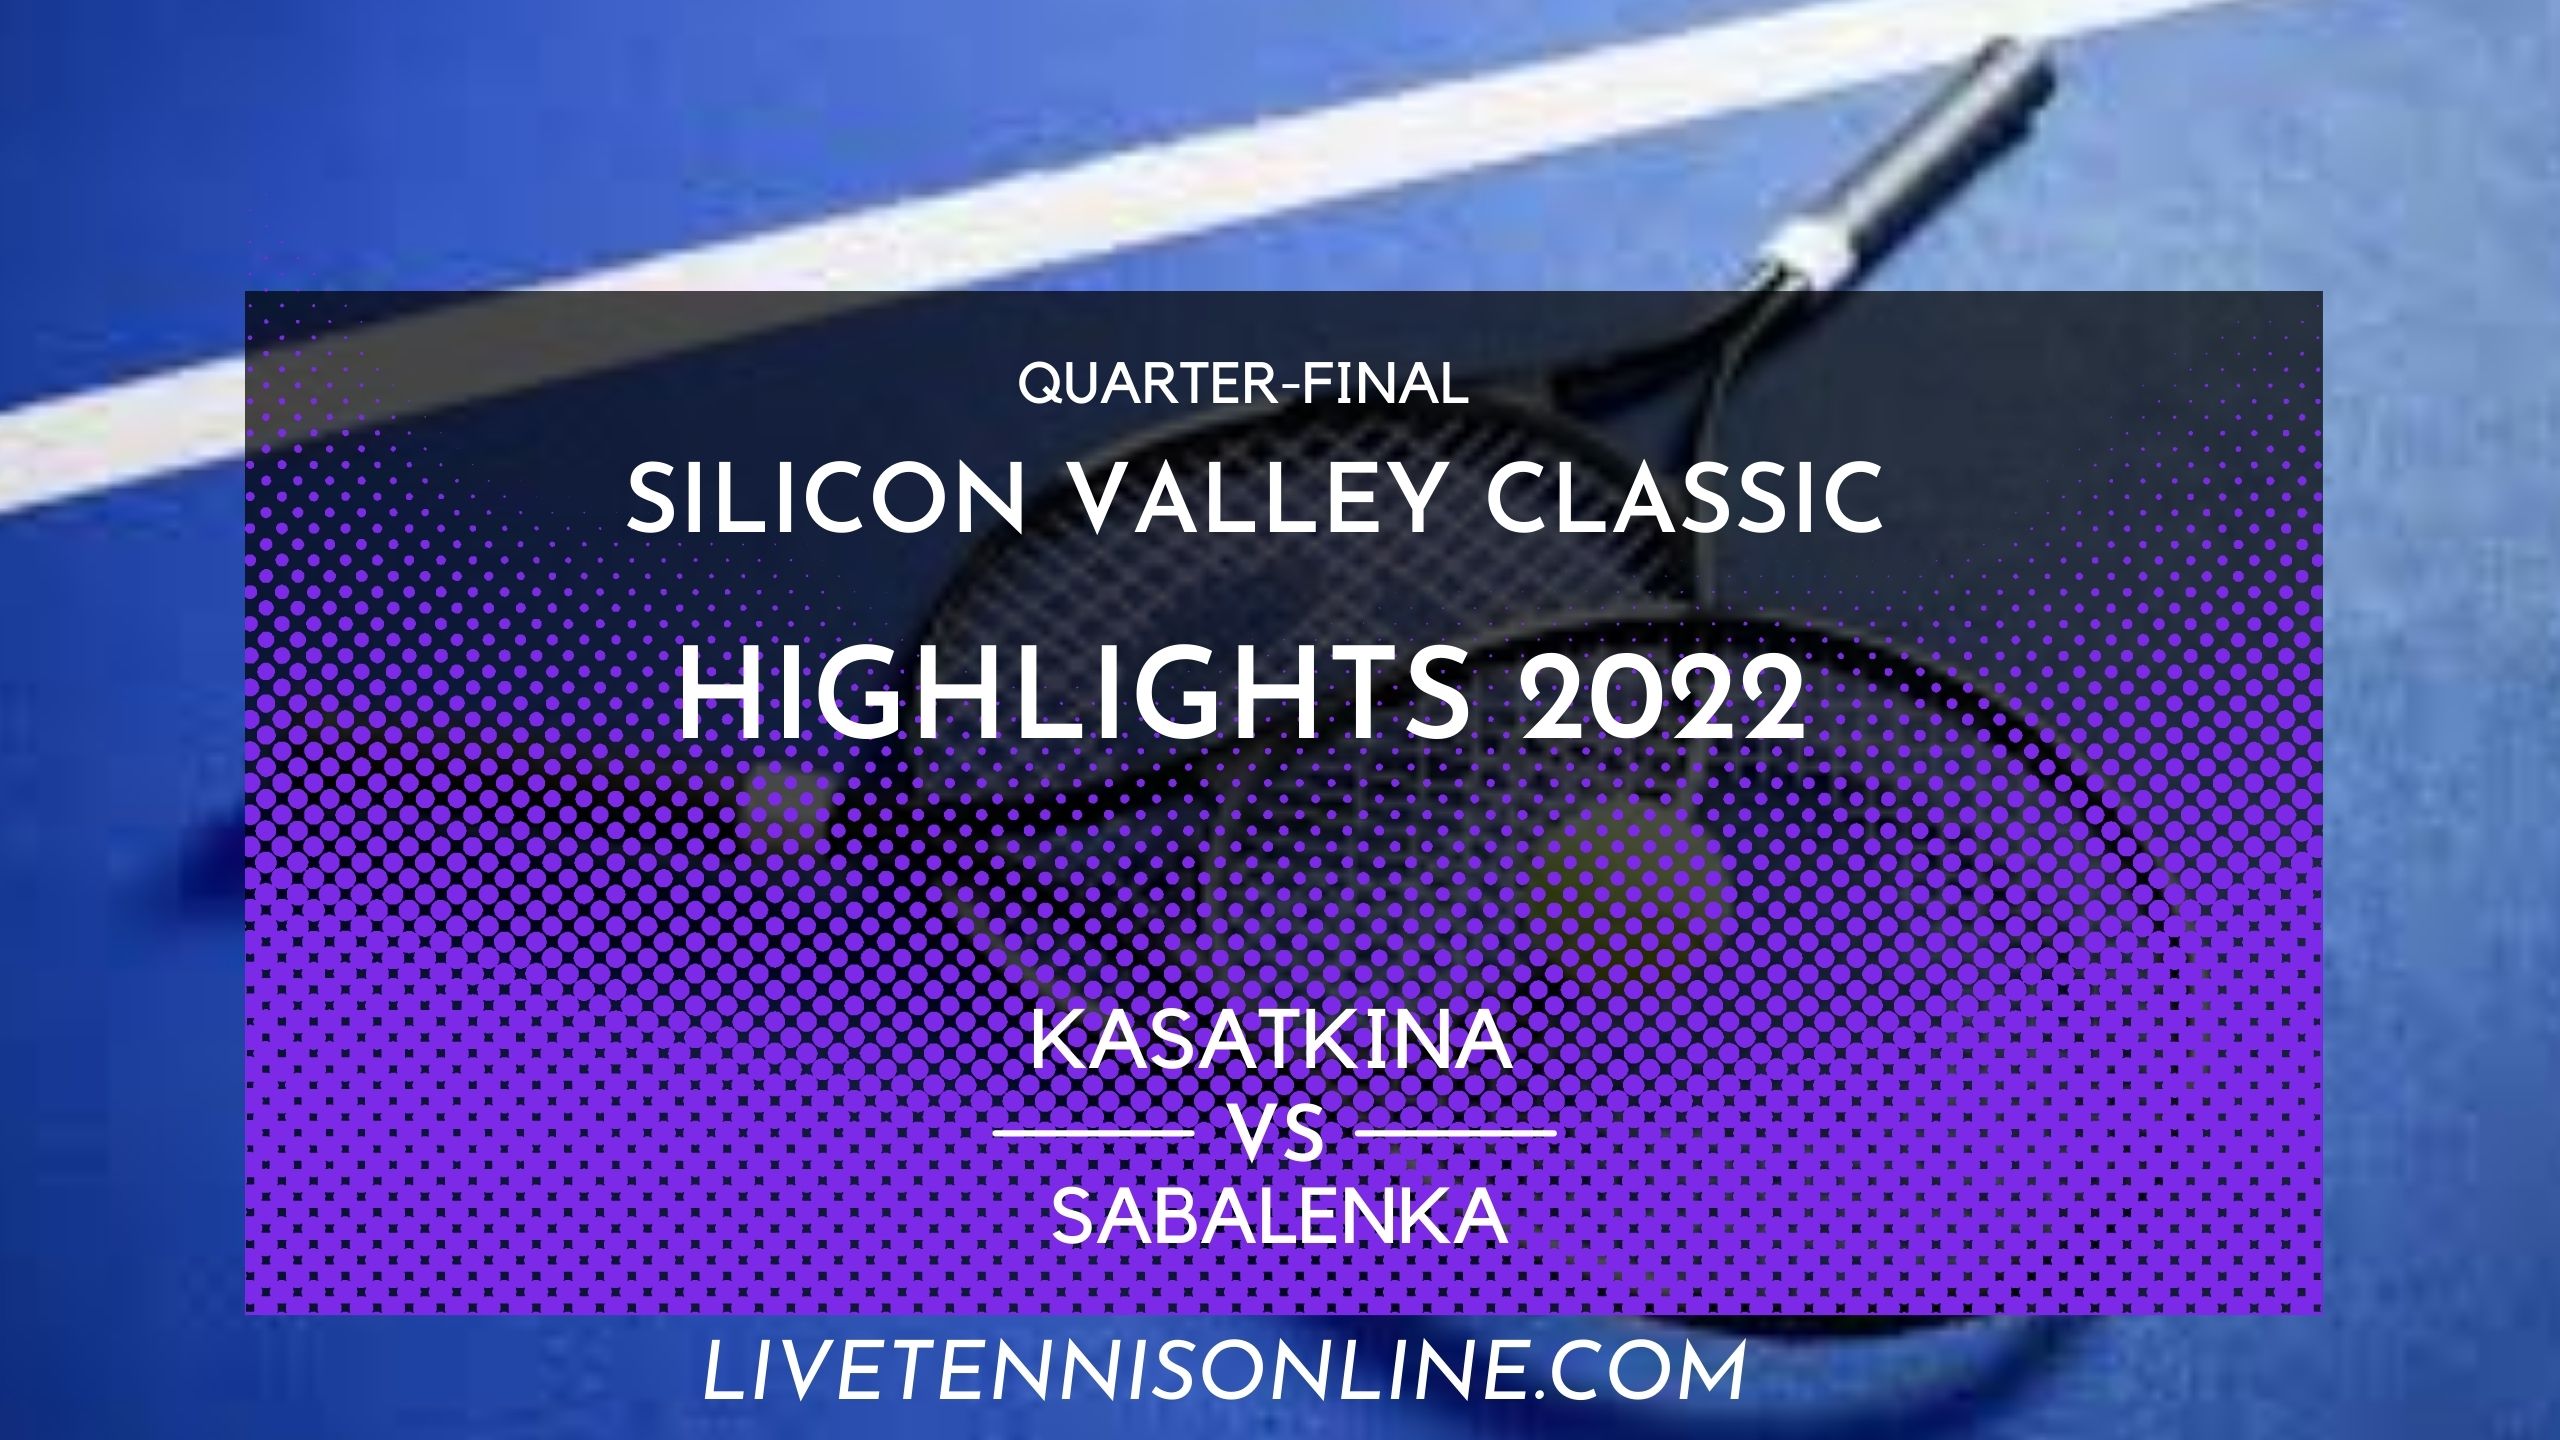 Kasatkina Vs Sabalenka QF Highlights 2022 Silicon Valley Classic